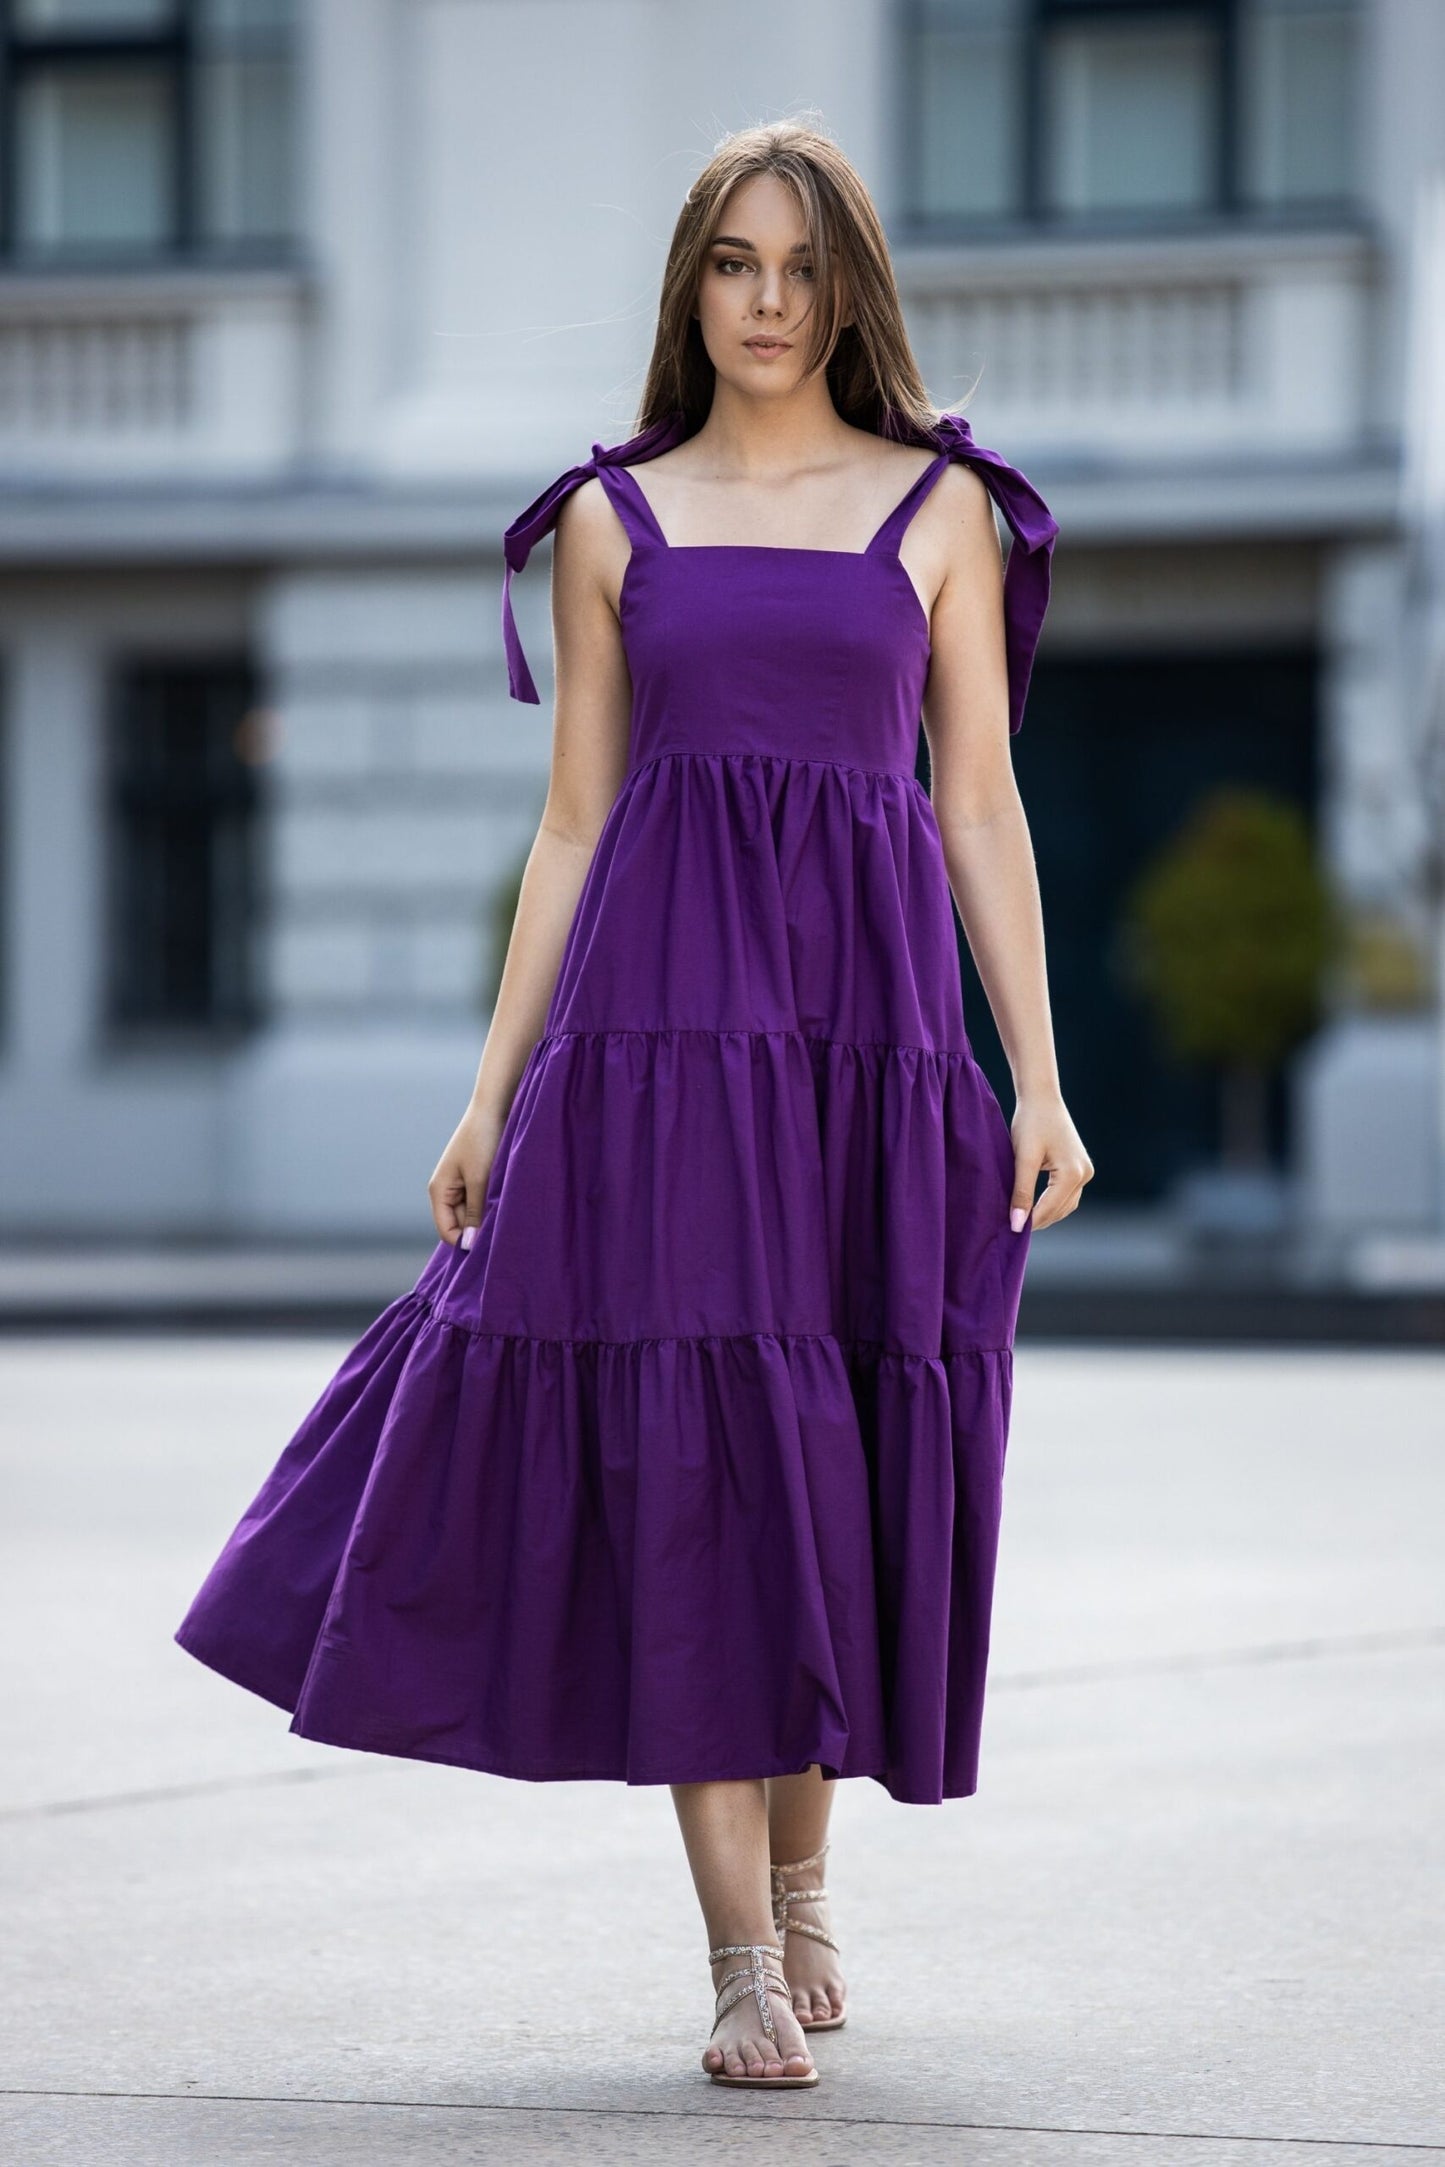 Dark Purple organic cotton dress with bows